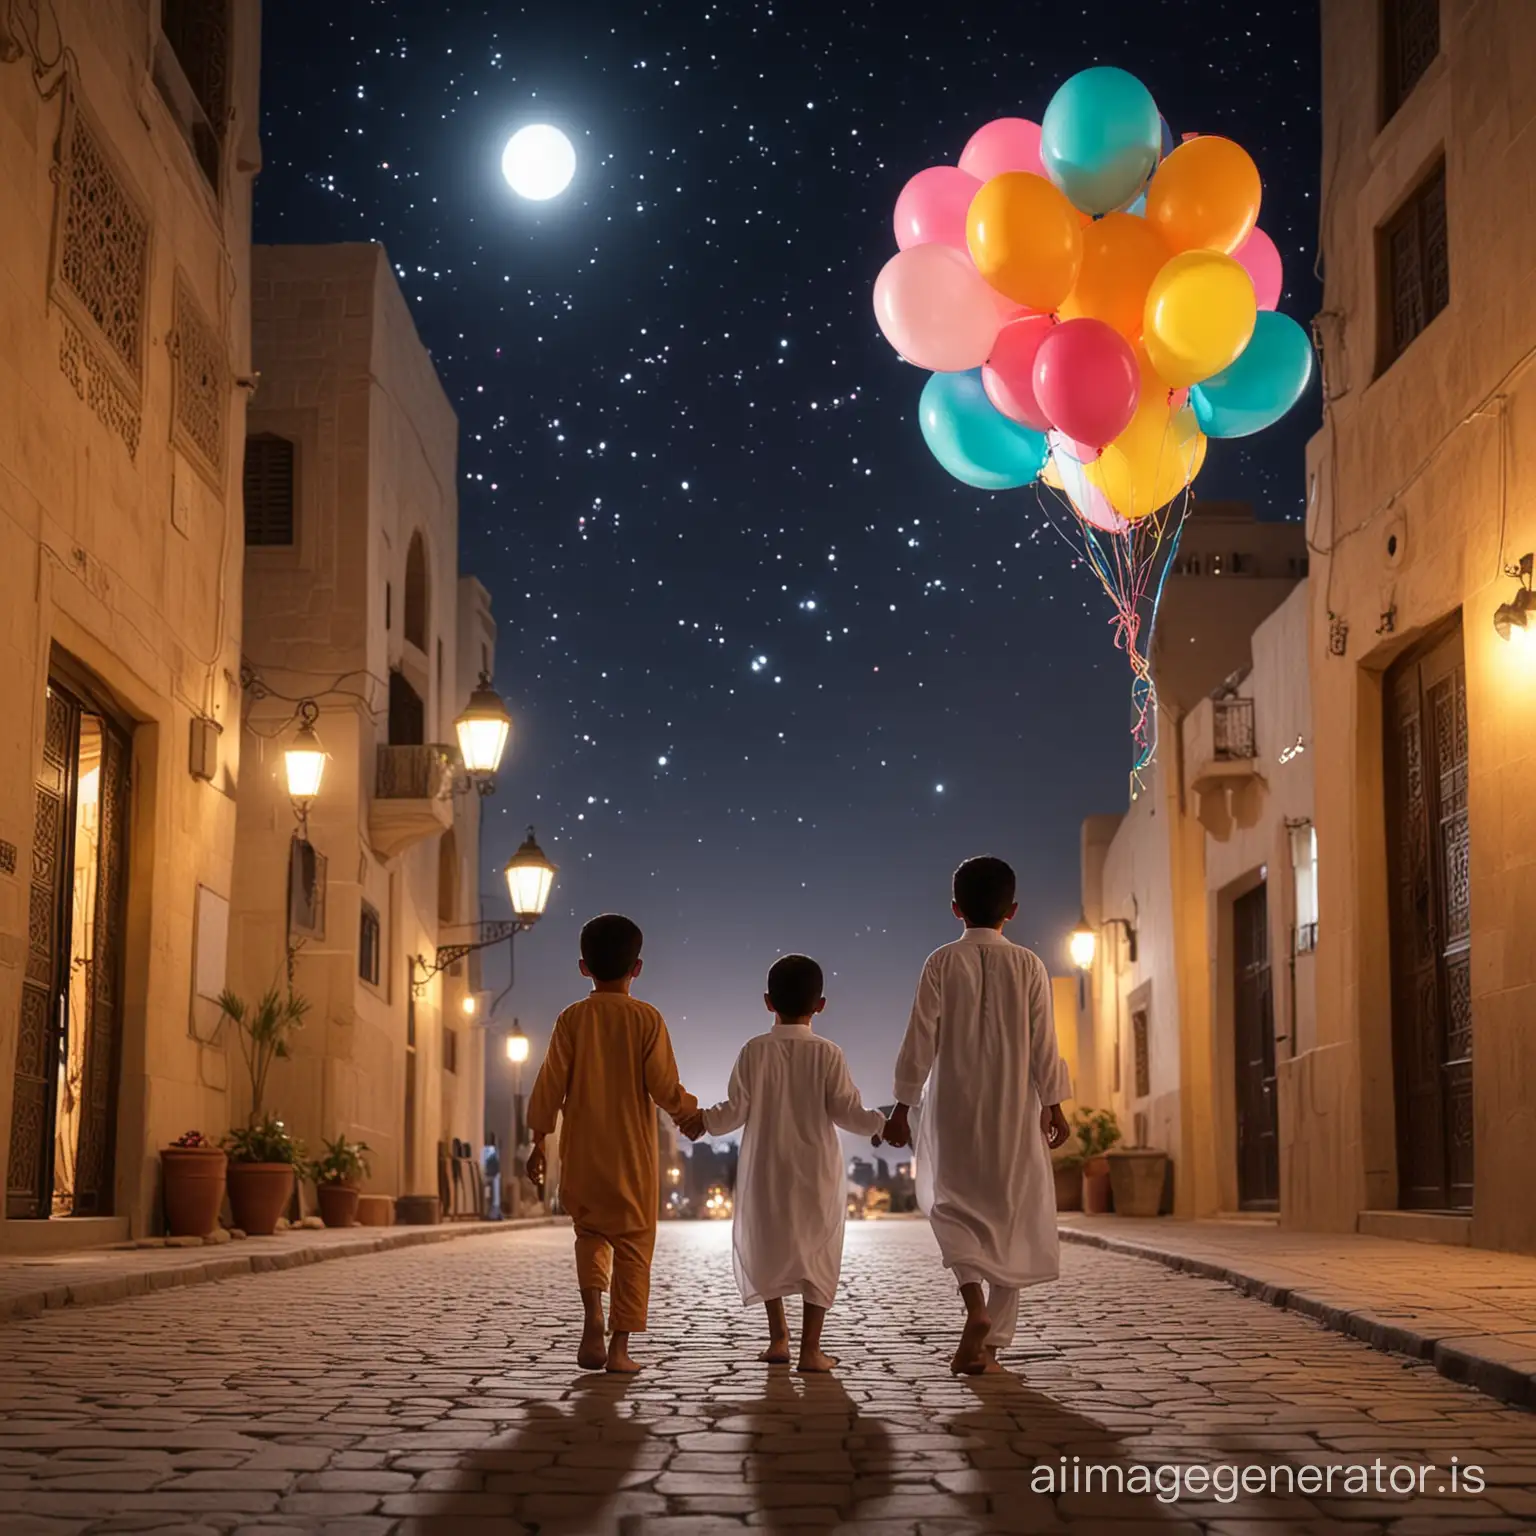 Joyful-Arab-Children-Celebrating-Eid-ul-Fitr-with-Balloons-and-Candy-at-Night